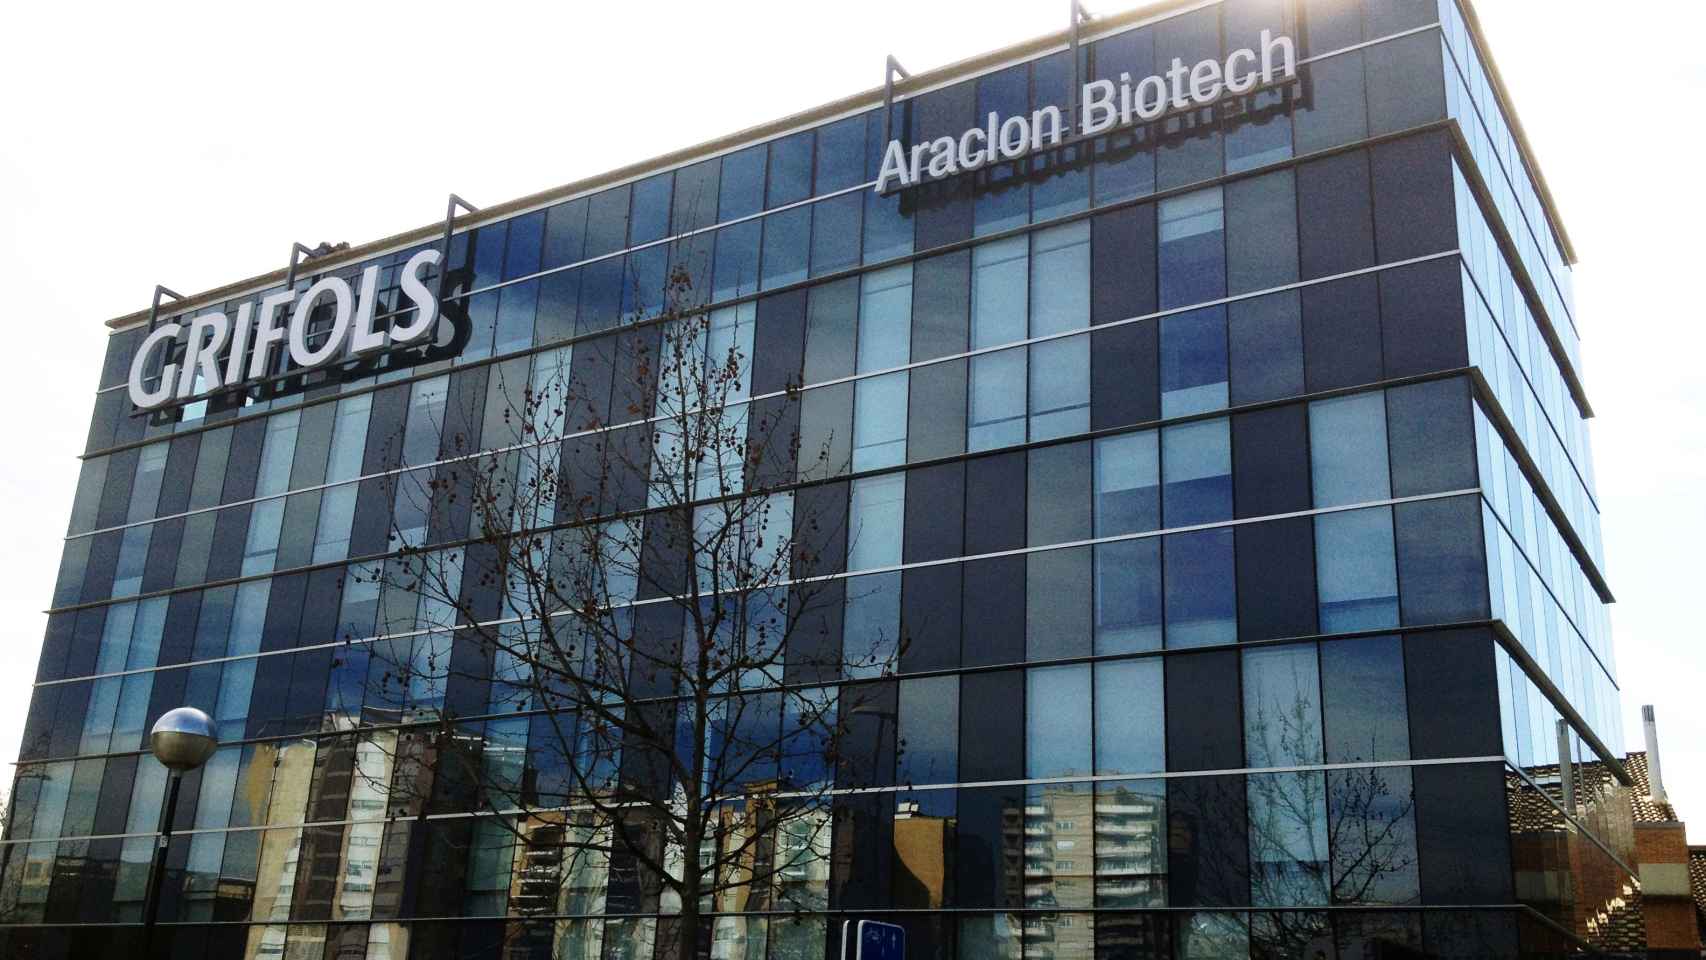 La sede de la filial zaragozana de Grifols Araclon Biotech / CG